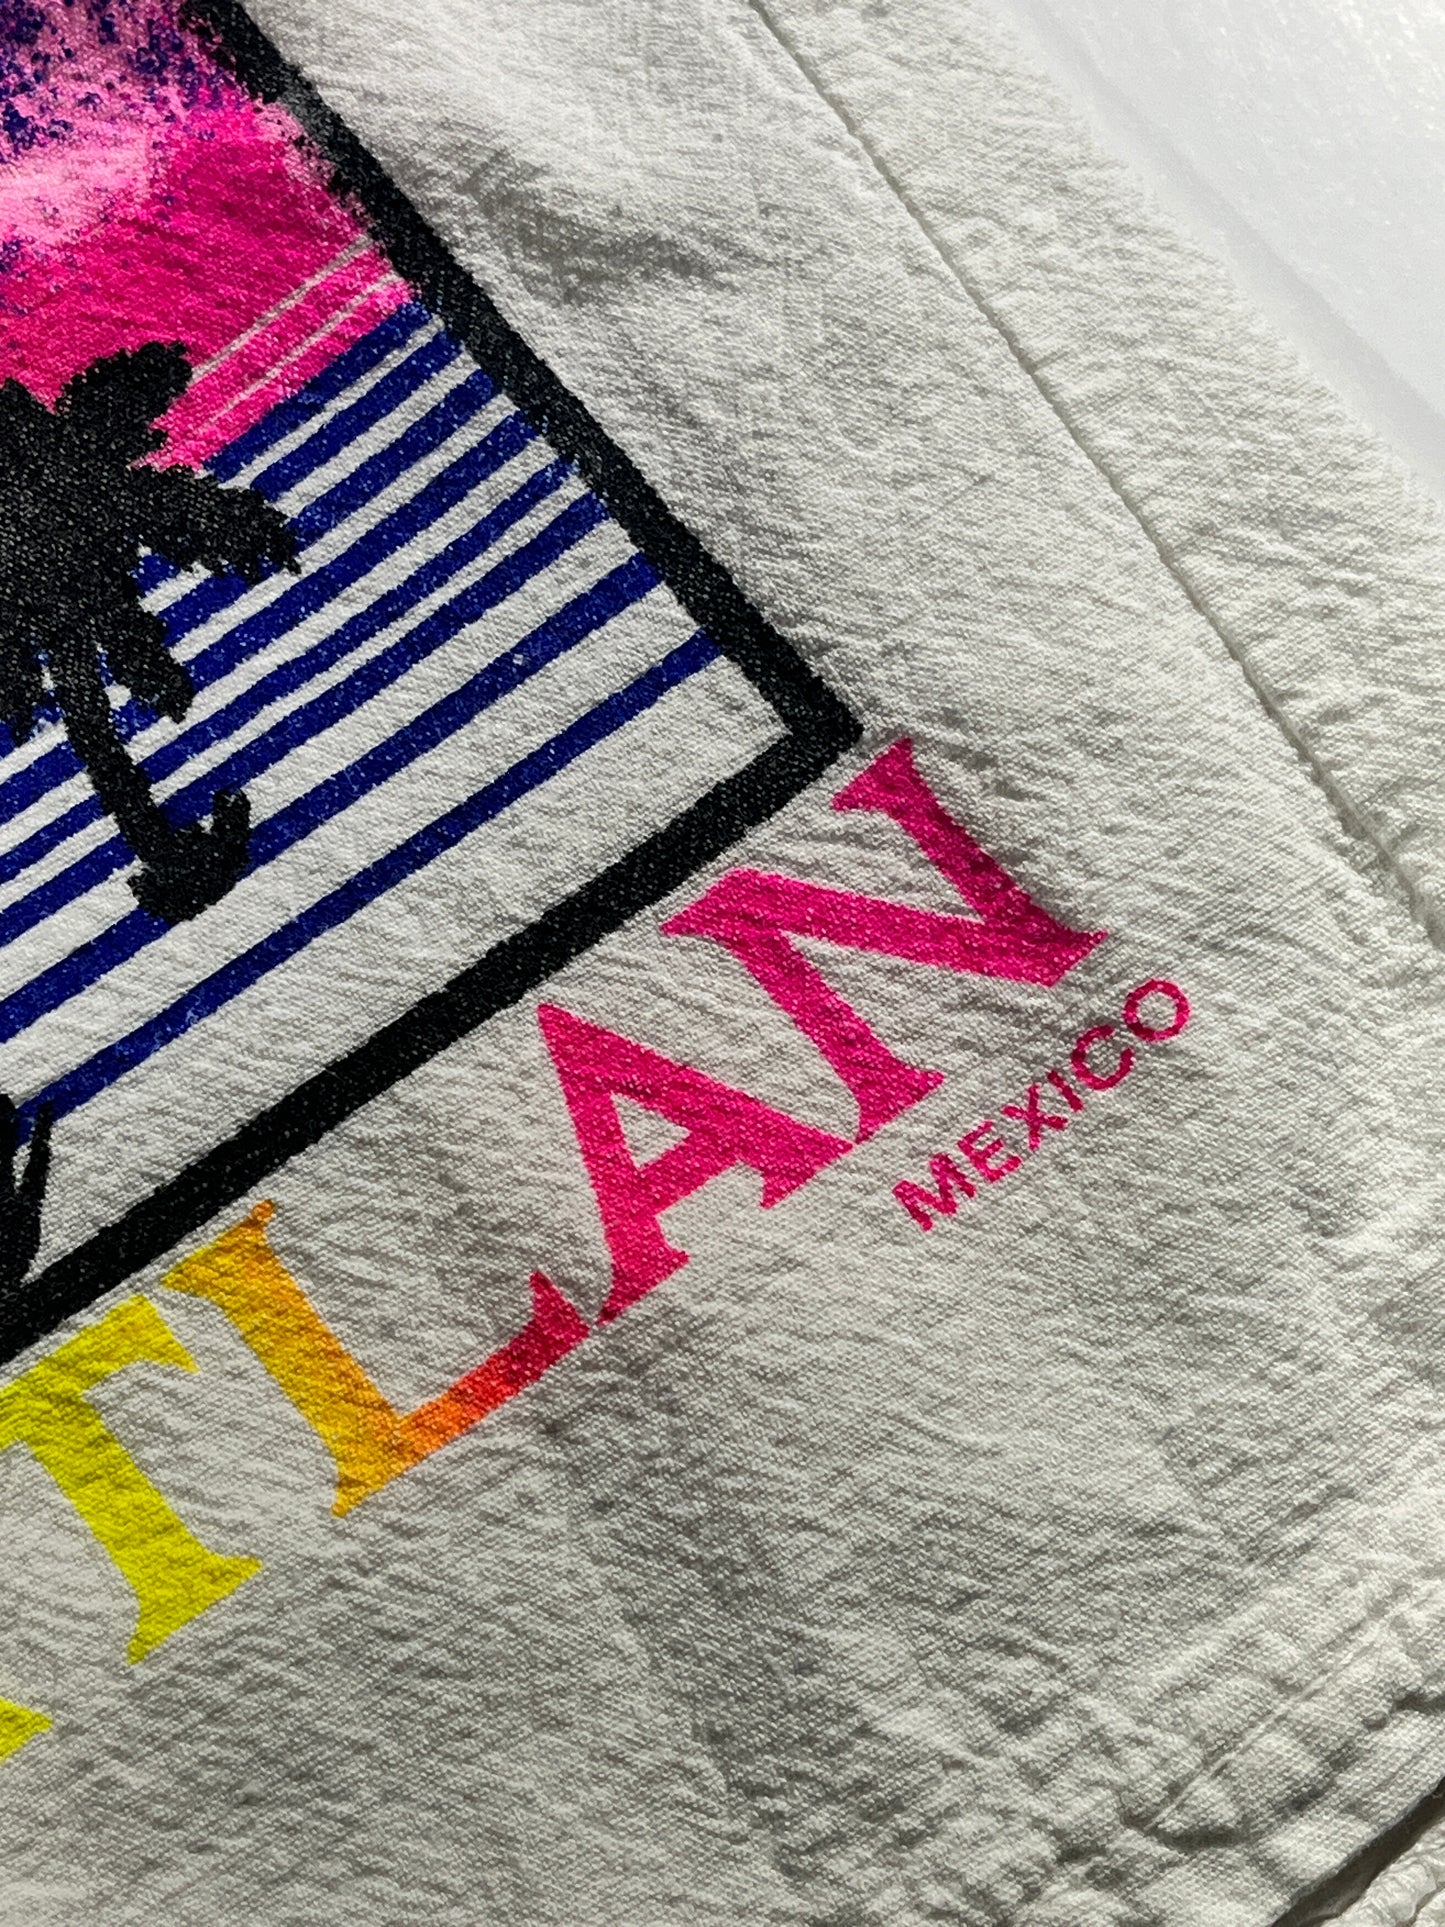 Vintage Tourist Shorts Light Mexico Mazatlan Has Pockets